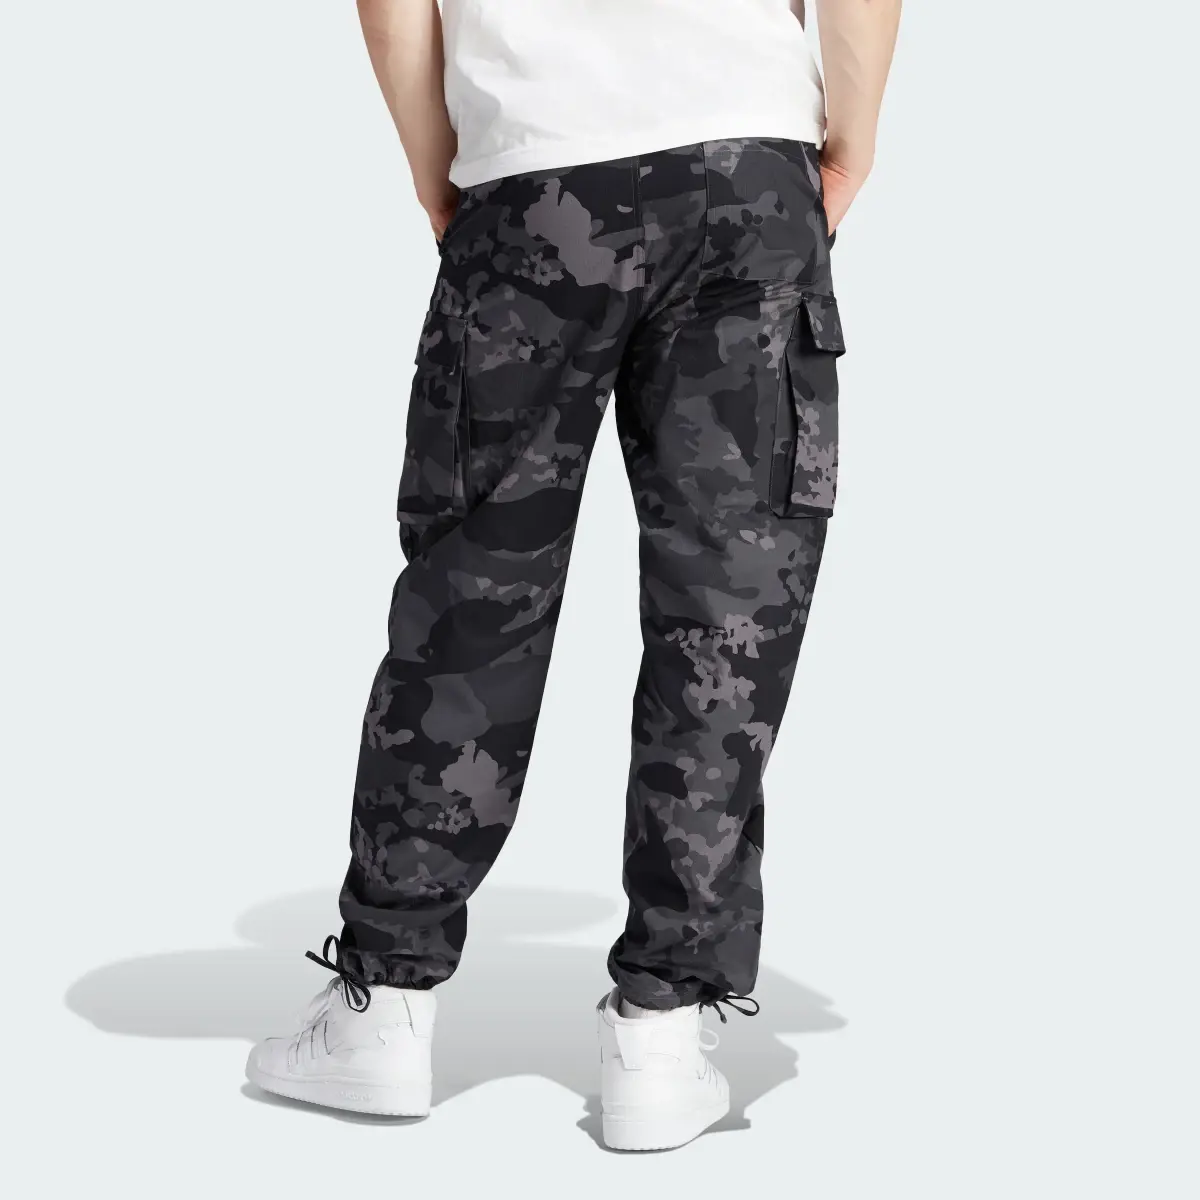 Adidas Pantalon cargo graphique imprimé camouflage. 2